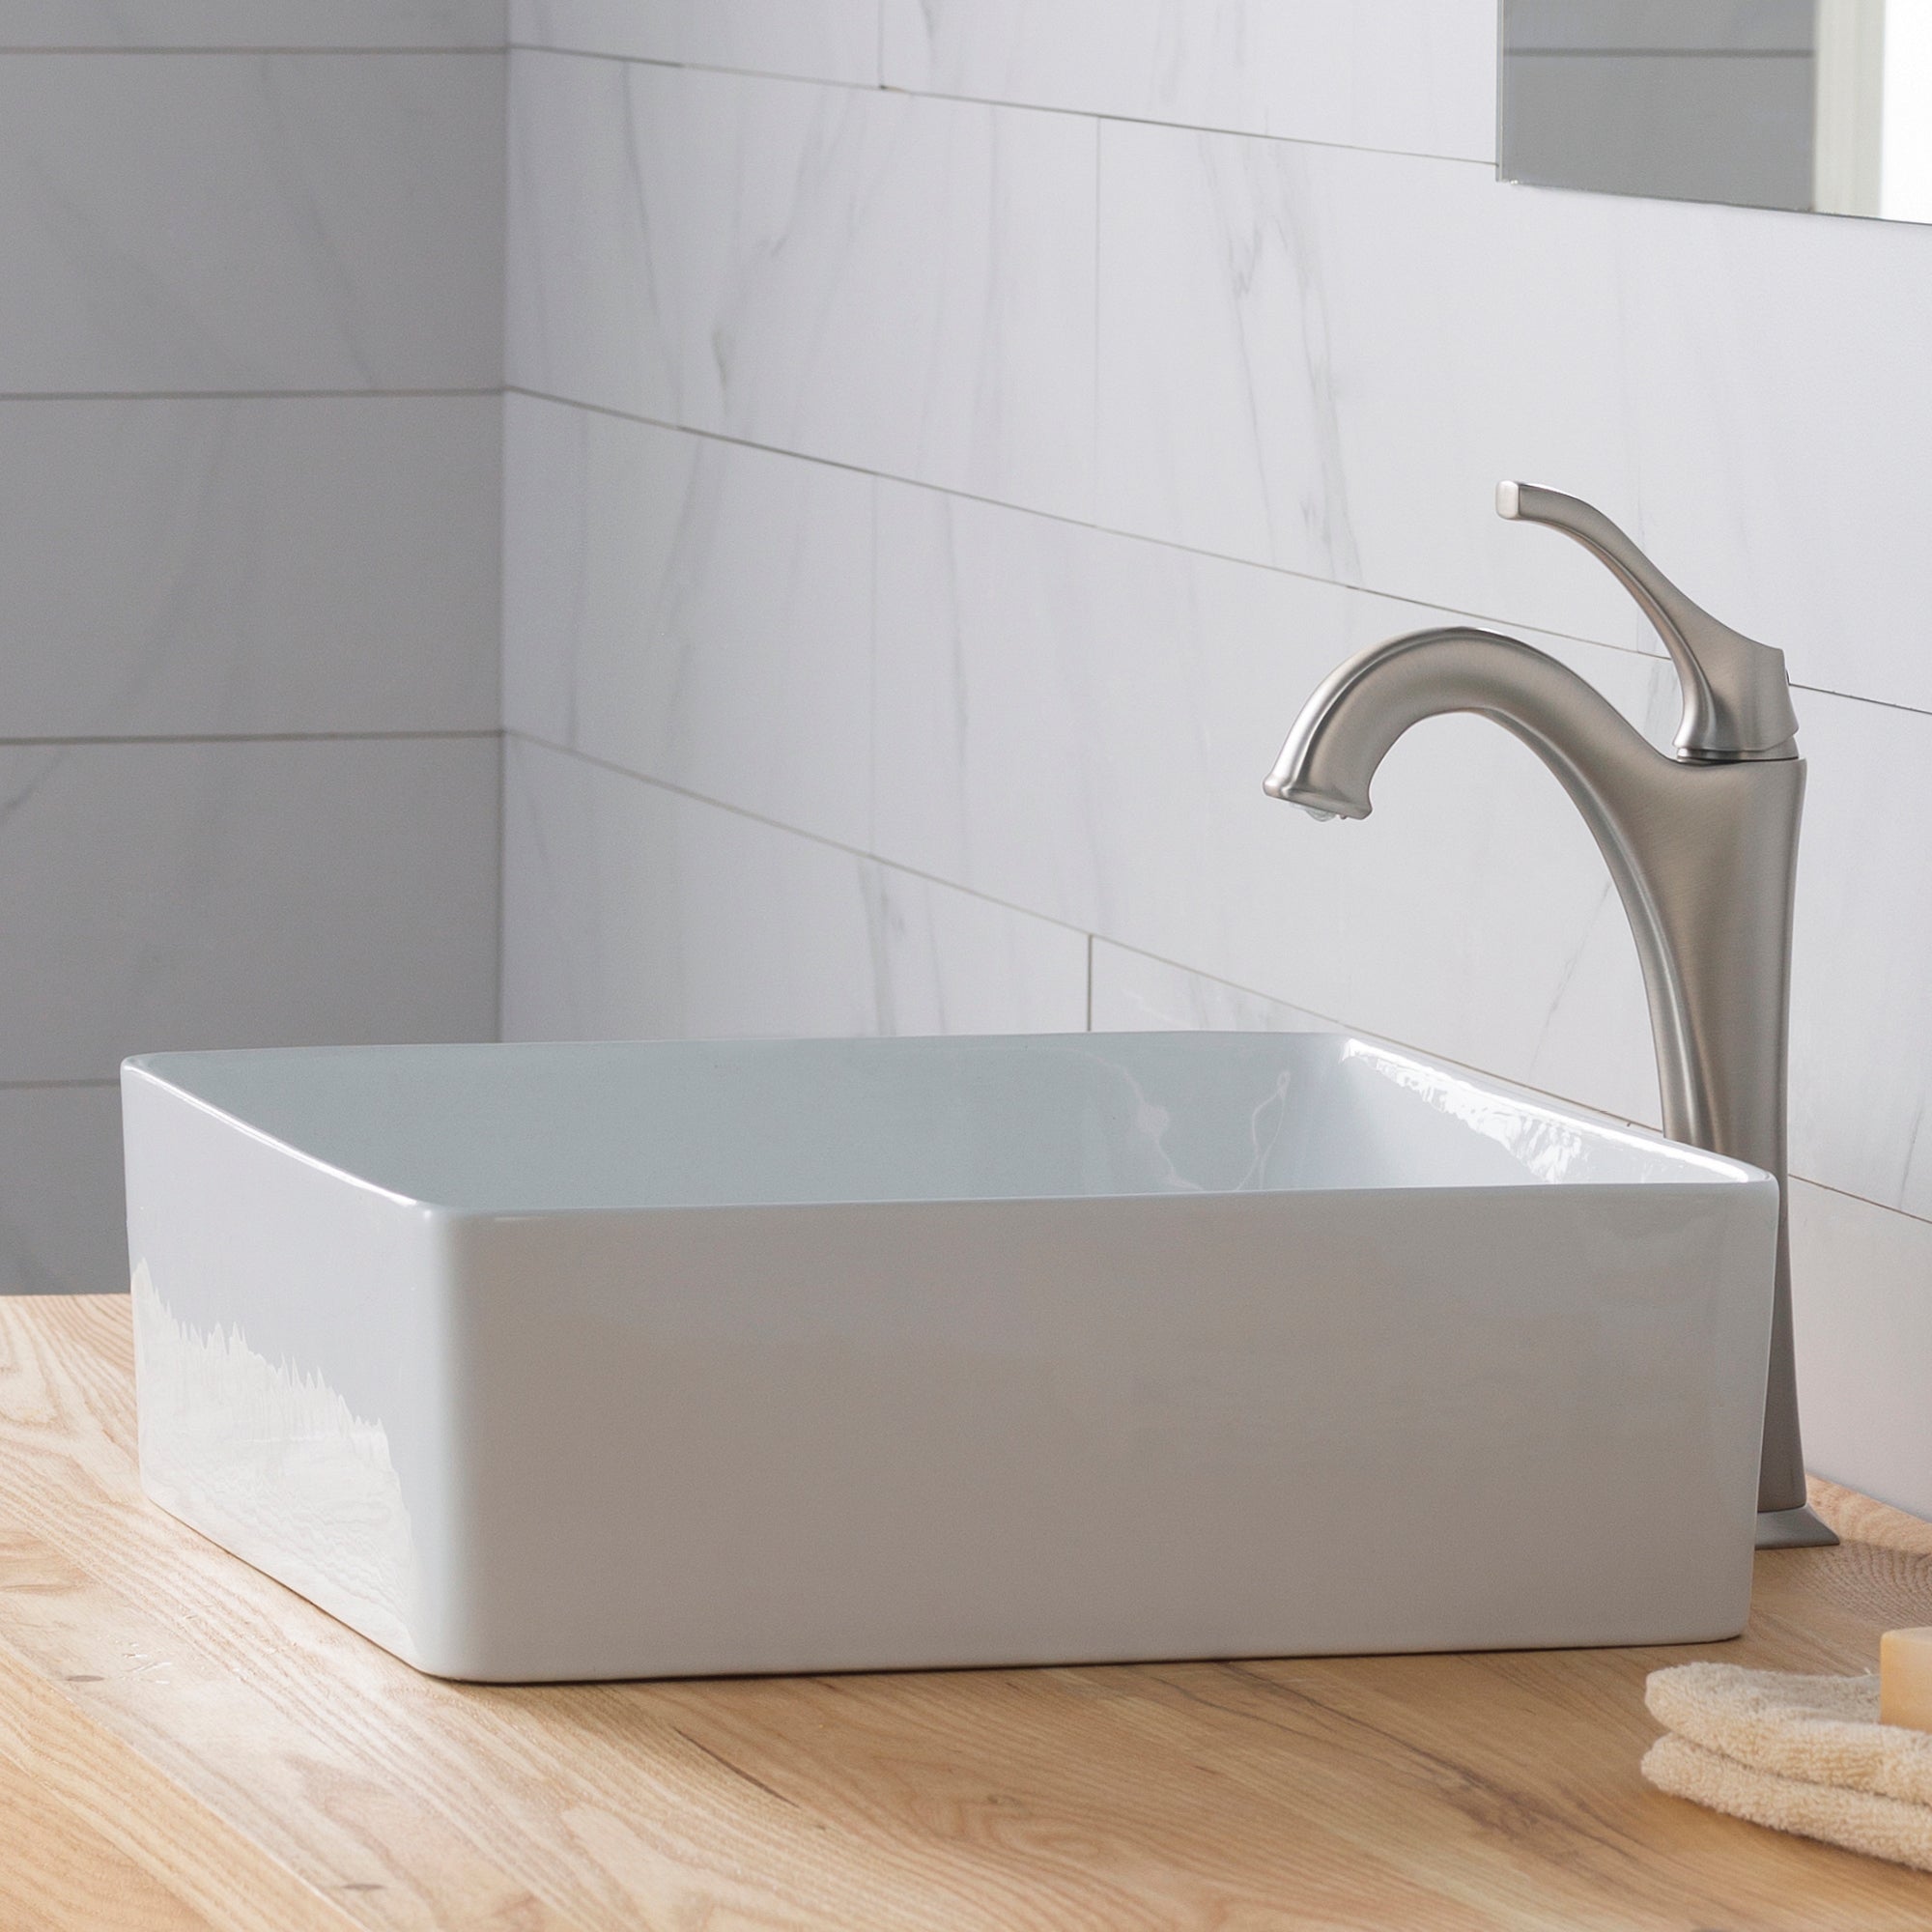 KRAUS Viva Square White Porcelain Ceramic Vessel Bathroom Sink with Pop-Up Drain, 15 5/8L x 15 5/8W x 5 1/8H-Bathroom Sinks-DirectSinks